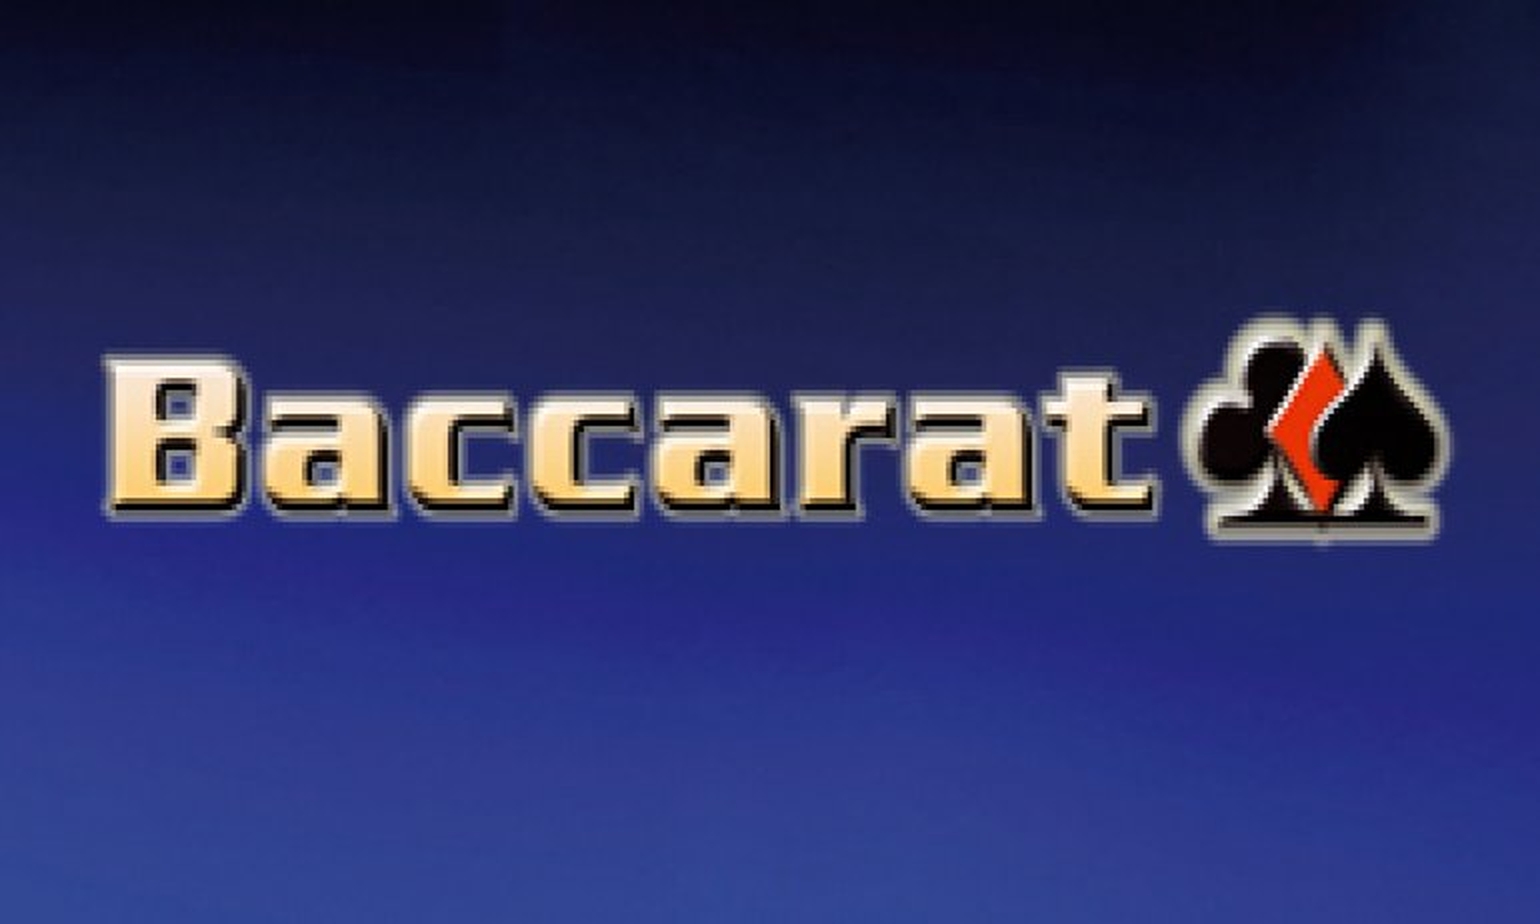 Baccarat demo